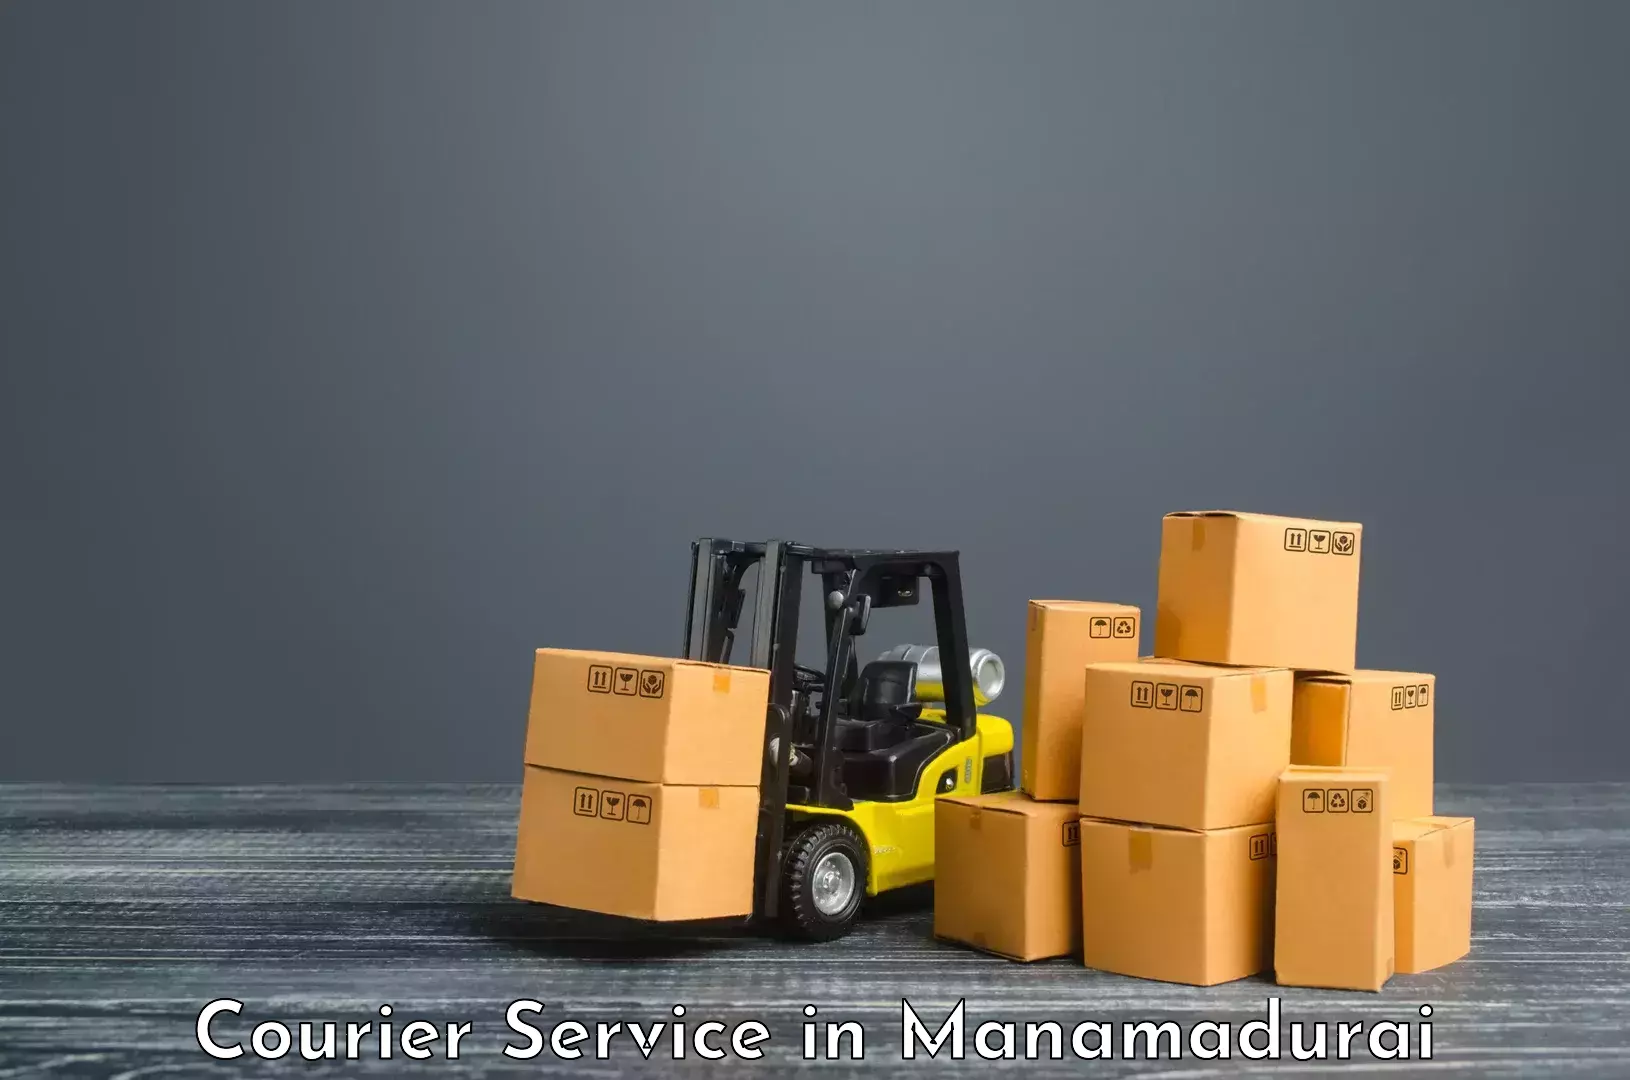 24/7 courier service in Manamadurai